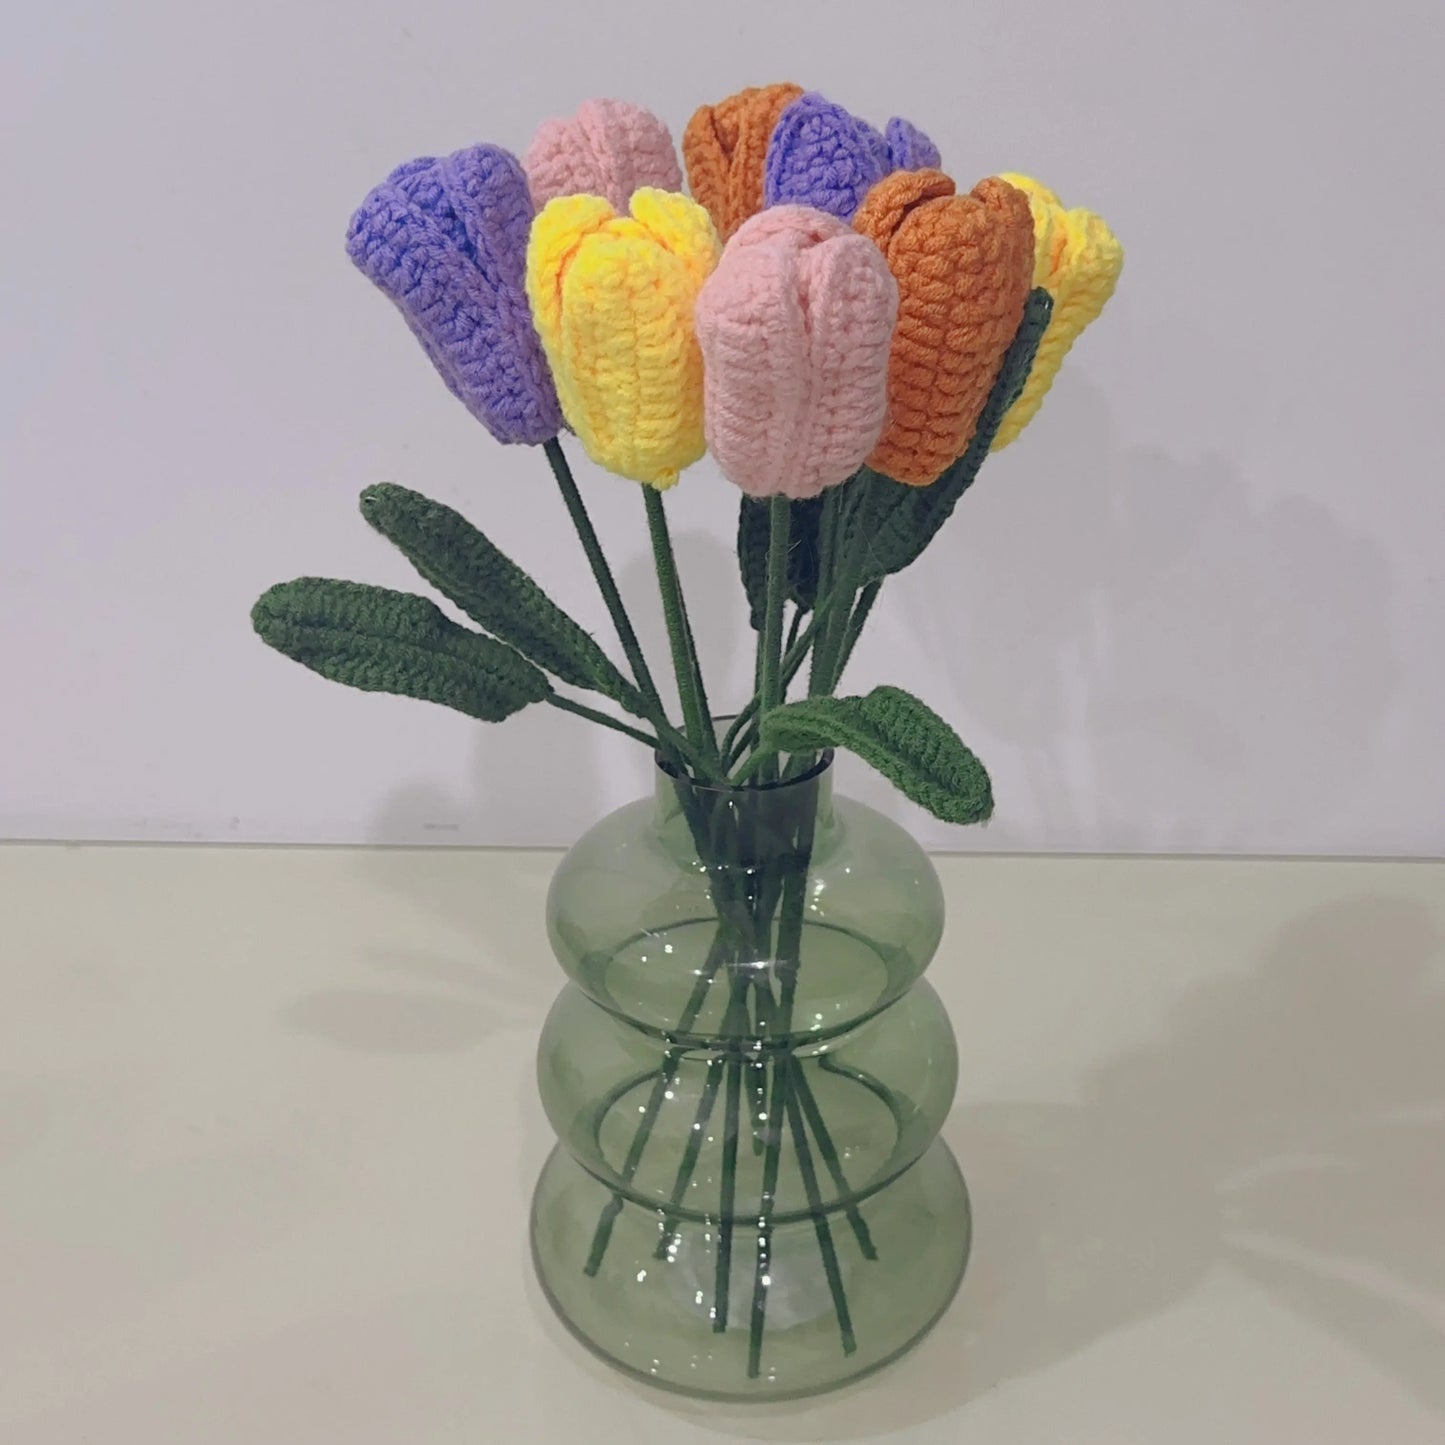 Hand knitted Woolen Tulip Sunday's Creative